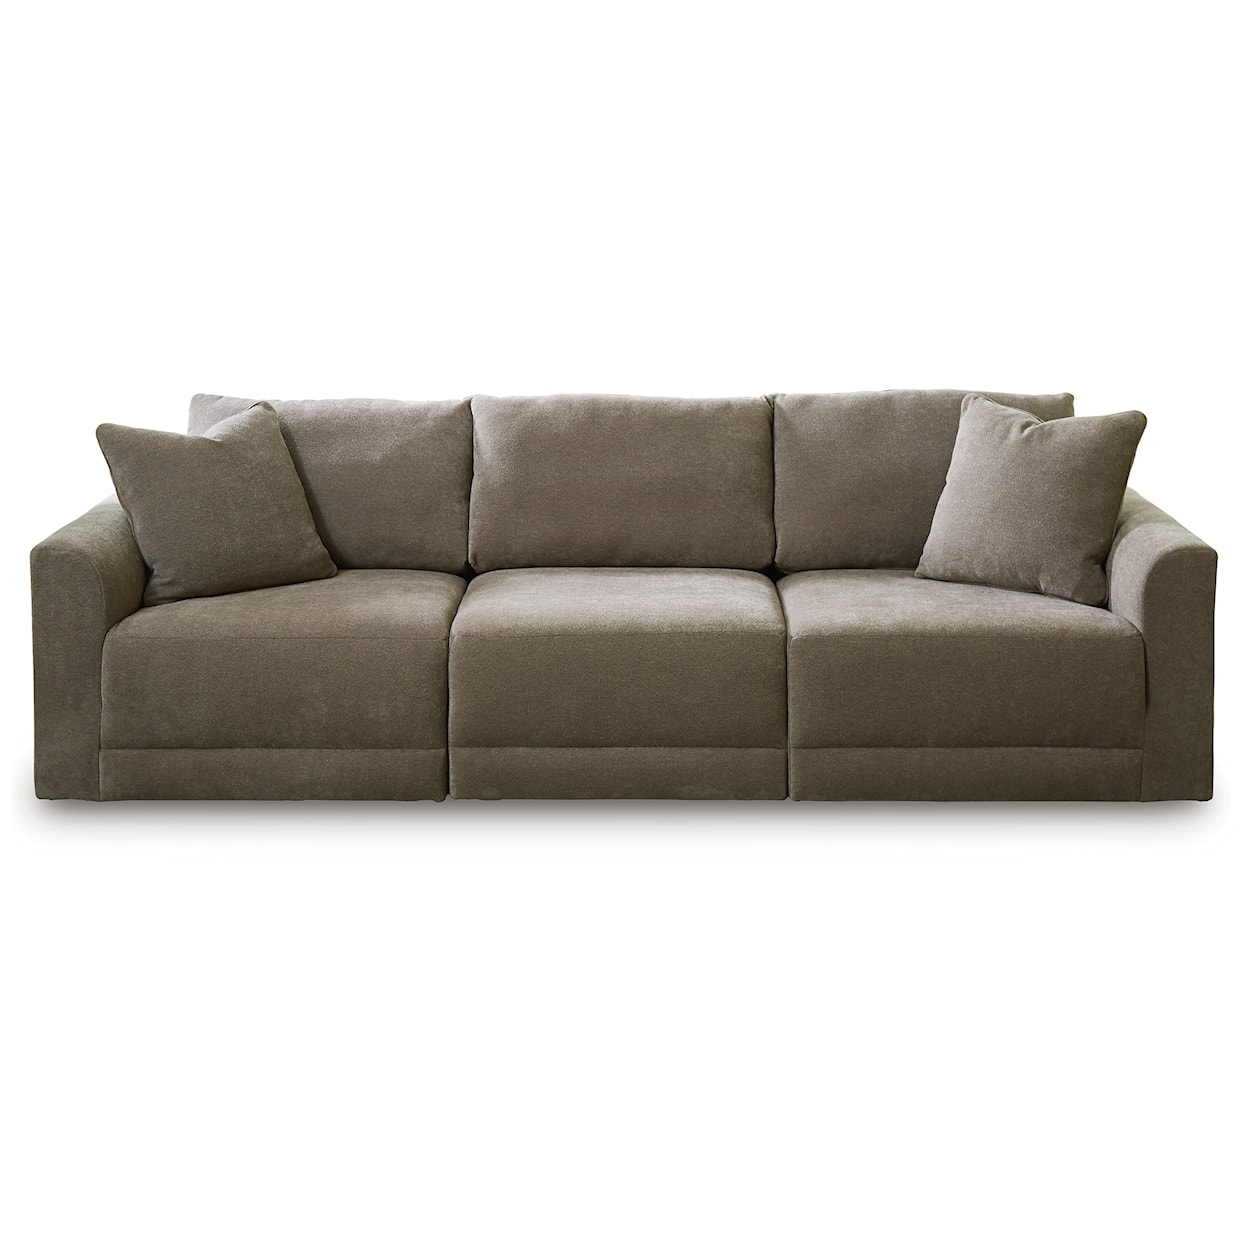 Benchcraft Raeanna Sectional Sofa